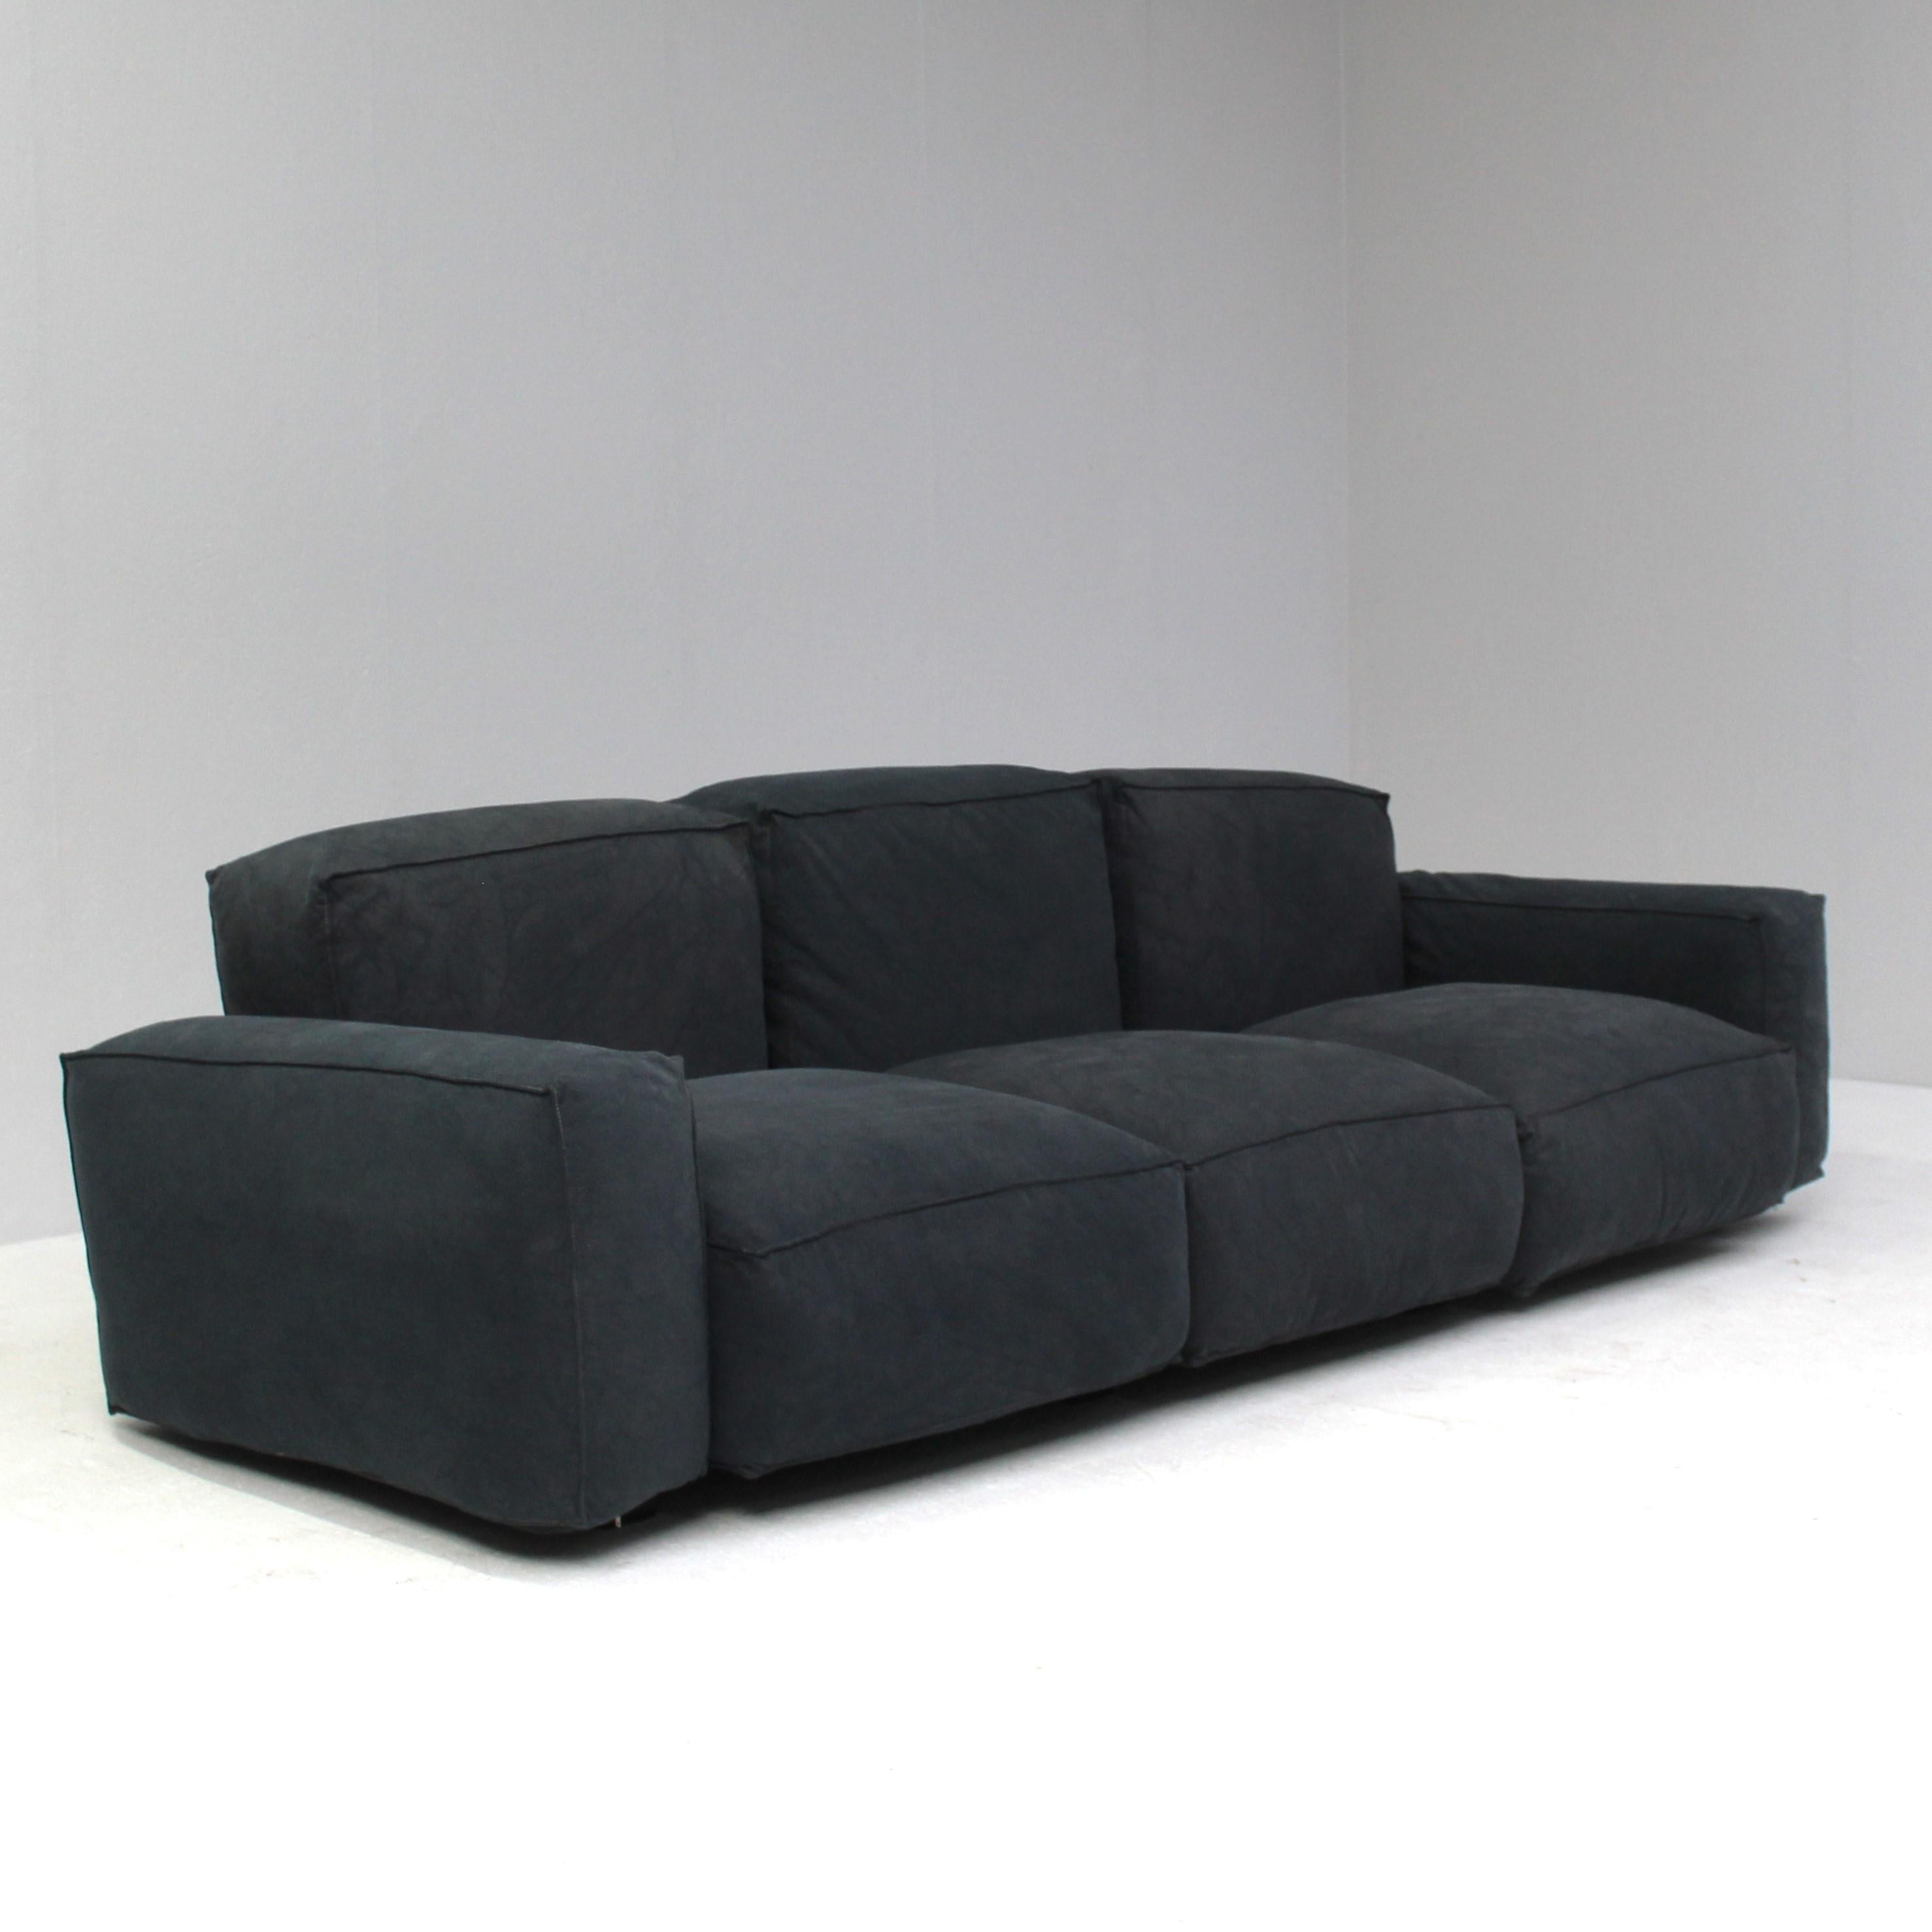 Marechiaro 3seat sofa by Mario Marenco for Arflex 1